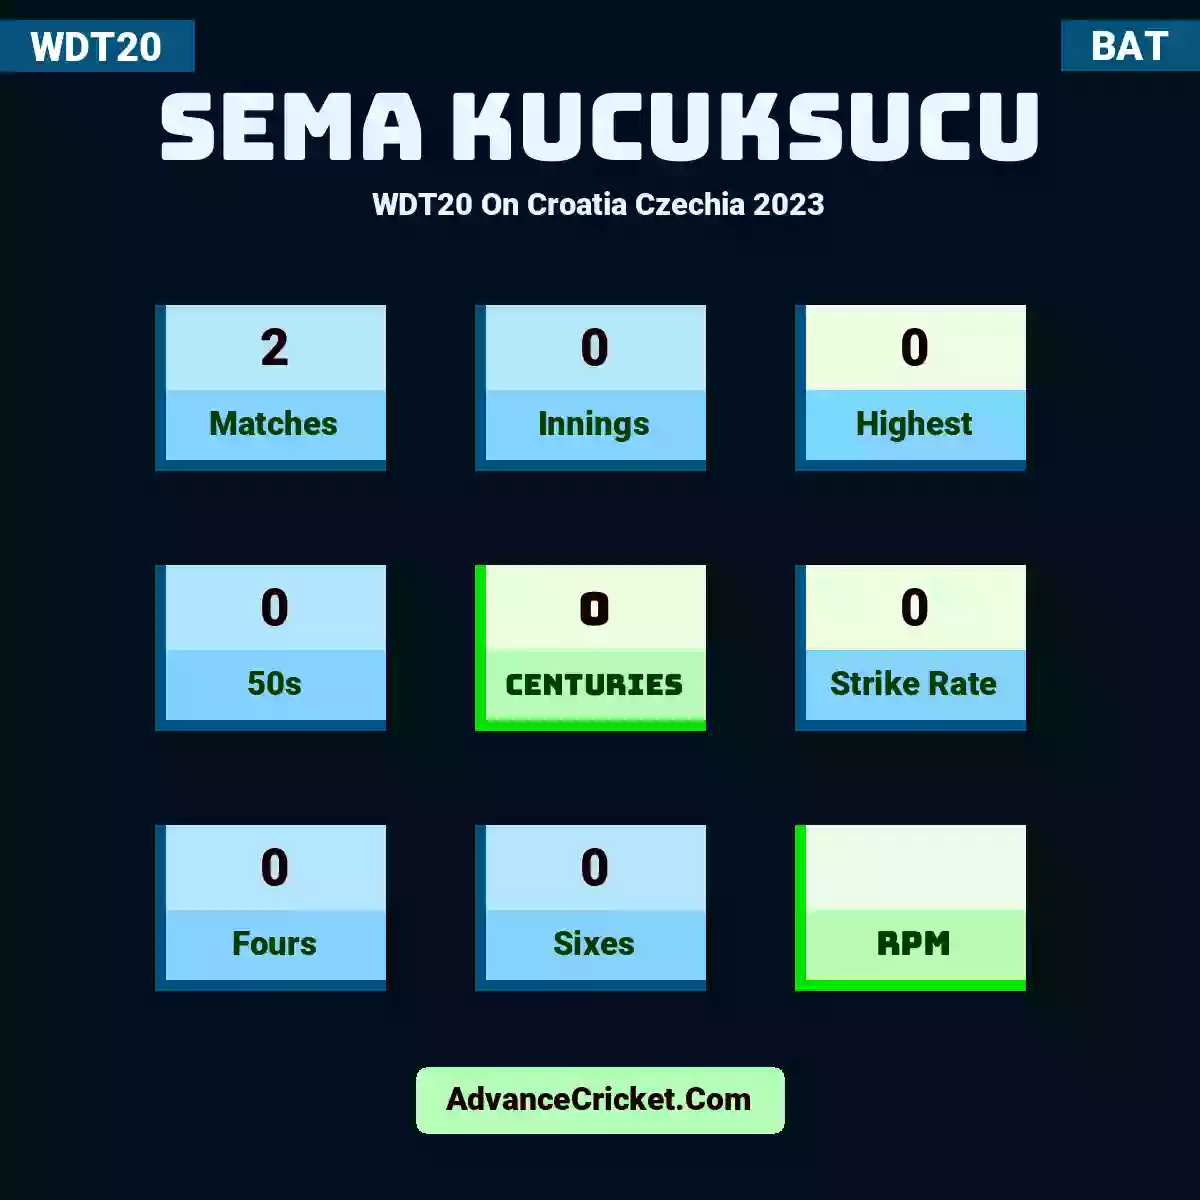 Sema Kucuksucu WDT20  On Croatia Czechia 2023, Sema Kucuksucu played 2 matches, scored 0 runs as highest, 0 half-centuries, and 0 centuries, with a strike rate of 0. S.Kucuksucu hit 0 fours and 0 sixes.